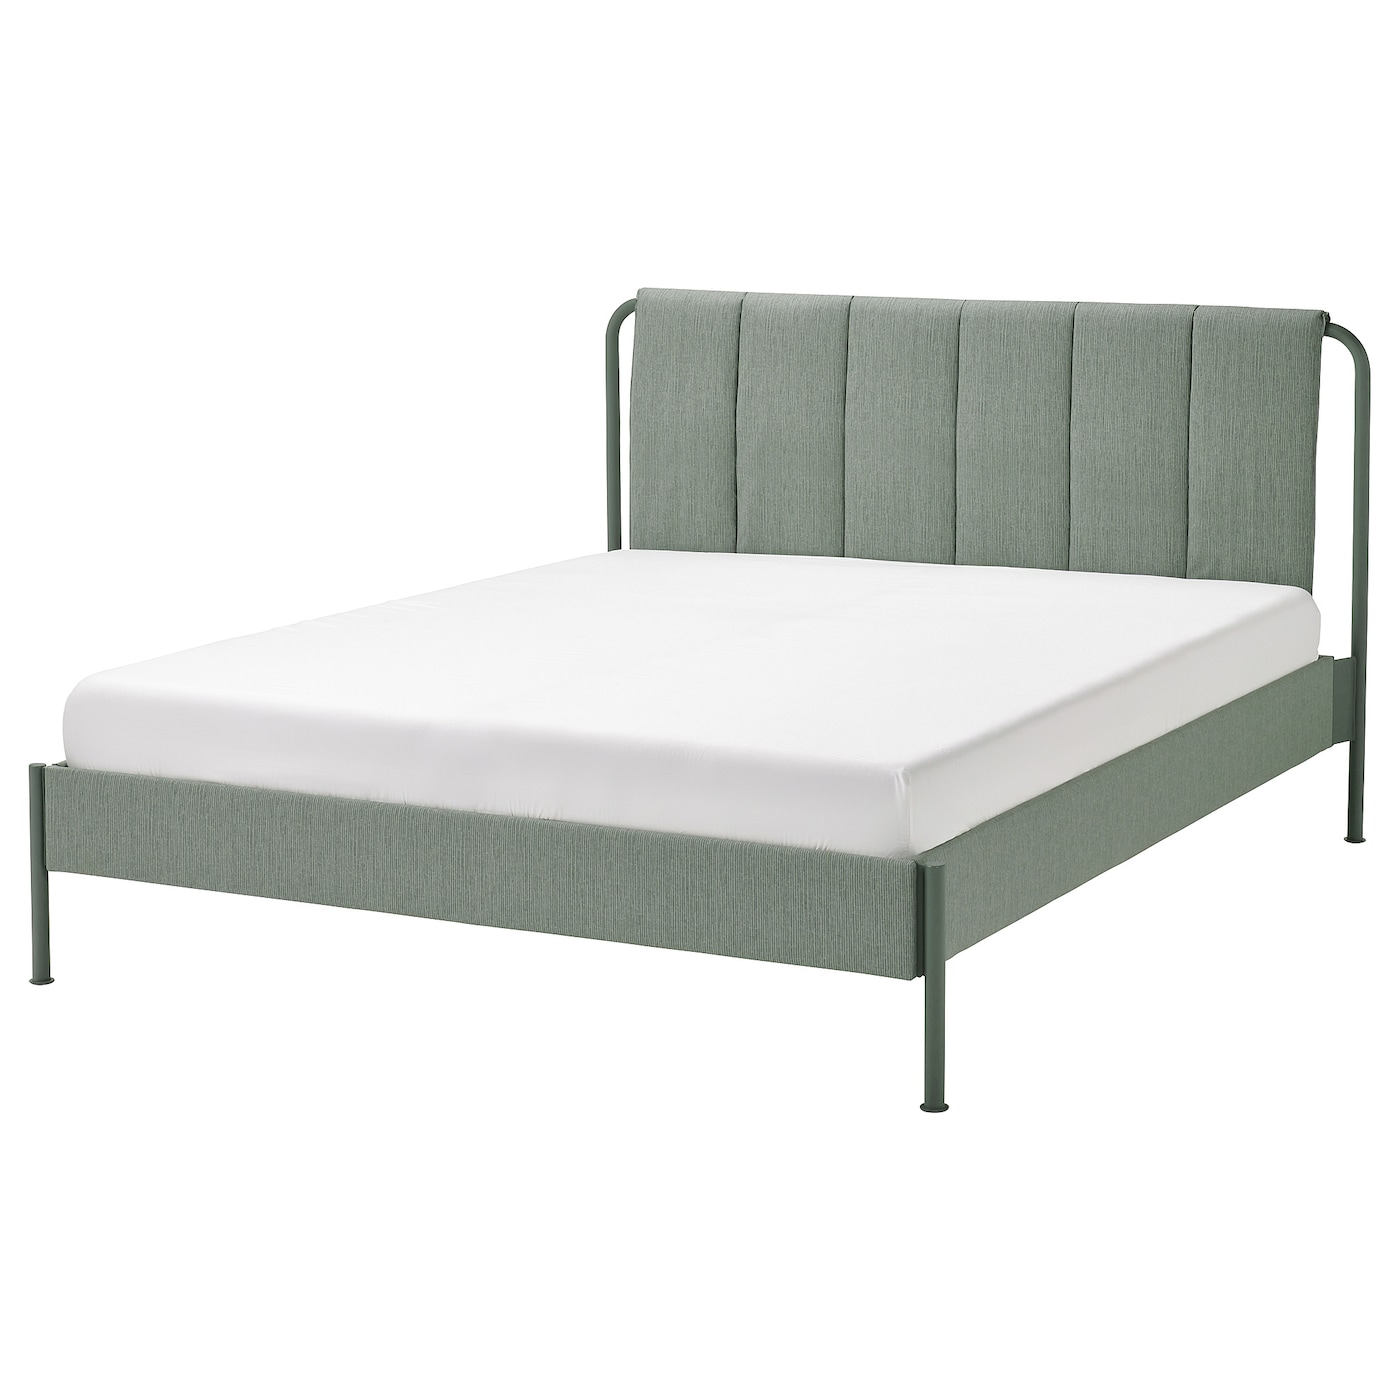 Каркас кровати с мягкой обивкой - IKEA TÄLLÅSEN/TALLASEN, 200х160 см, светло-зеленый, ТЭЛЛАСОН ИКЕА